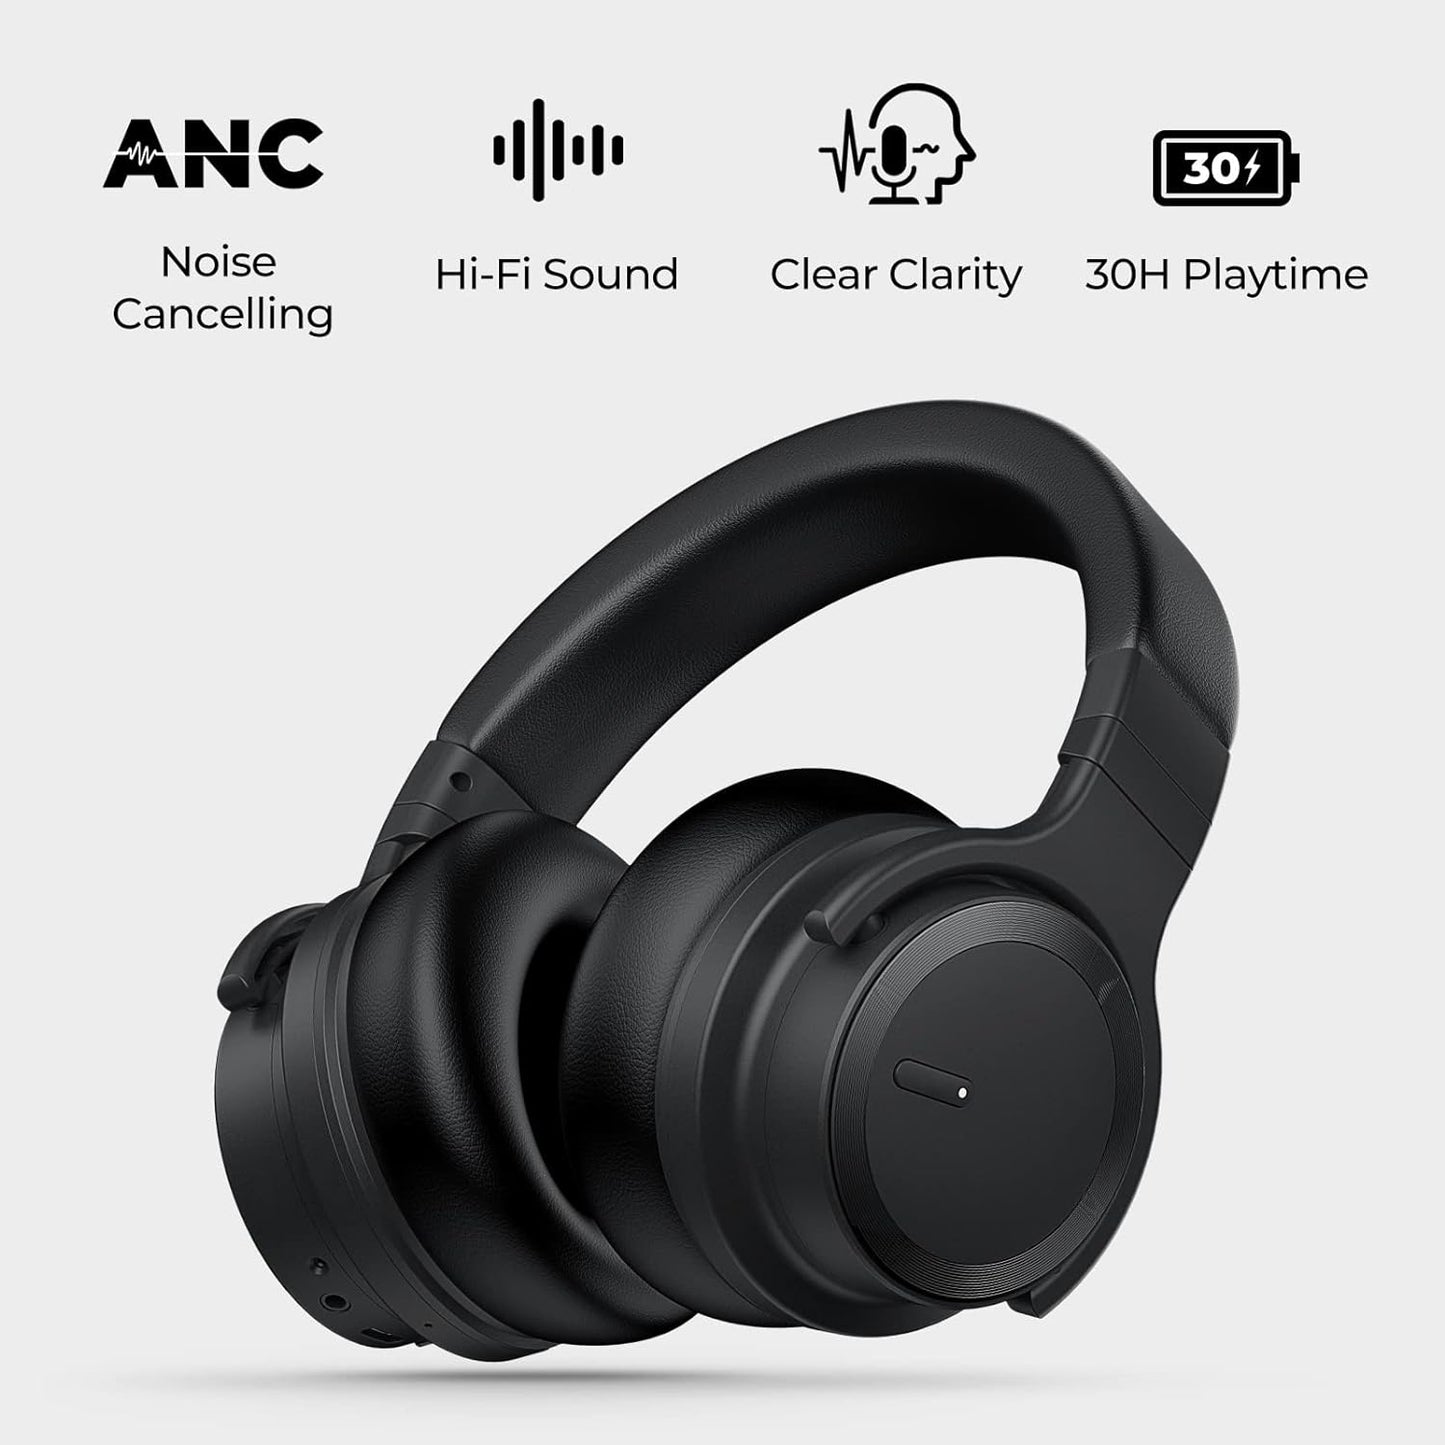 E7 Active Noise Cancelling Headphones Wireless Bluetooth Headphones with Rich Bass, Wireless Headphones with Clear Calls, Bluetooth 5.0, 30 Hours Playtime, Comfort Fit, Black